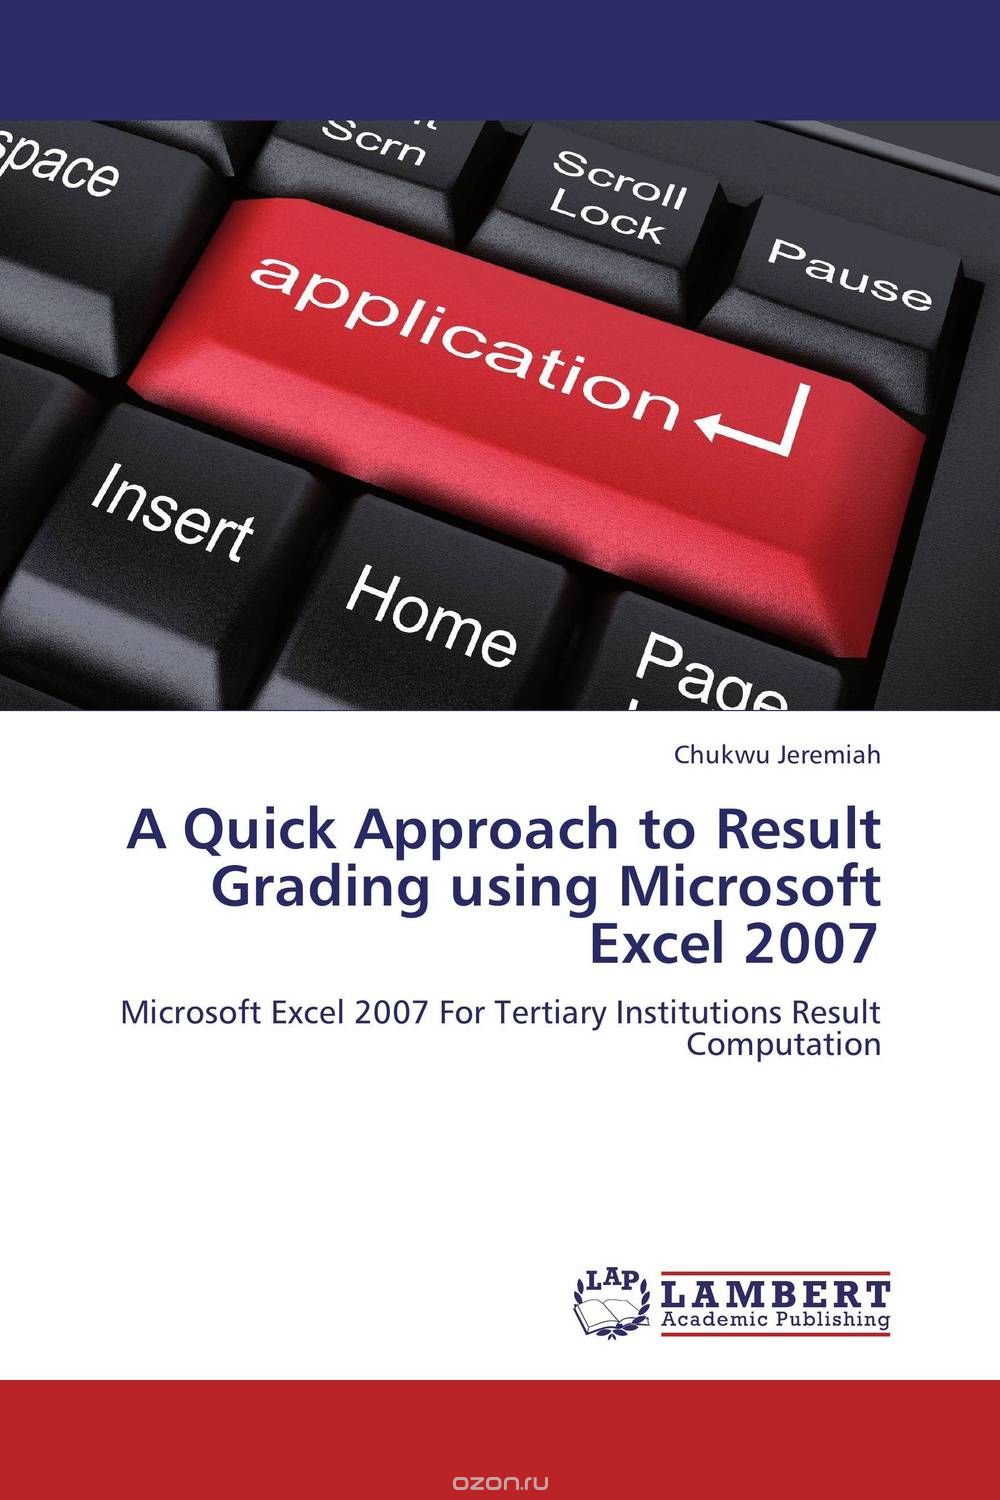 Скачать книгу "A Quick Approach to Result Grading using Microsoft Excel 2007"